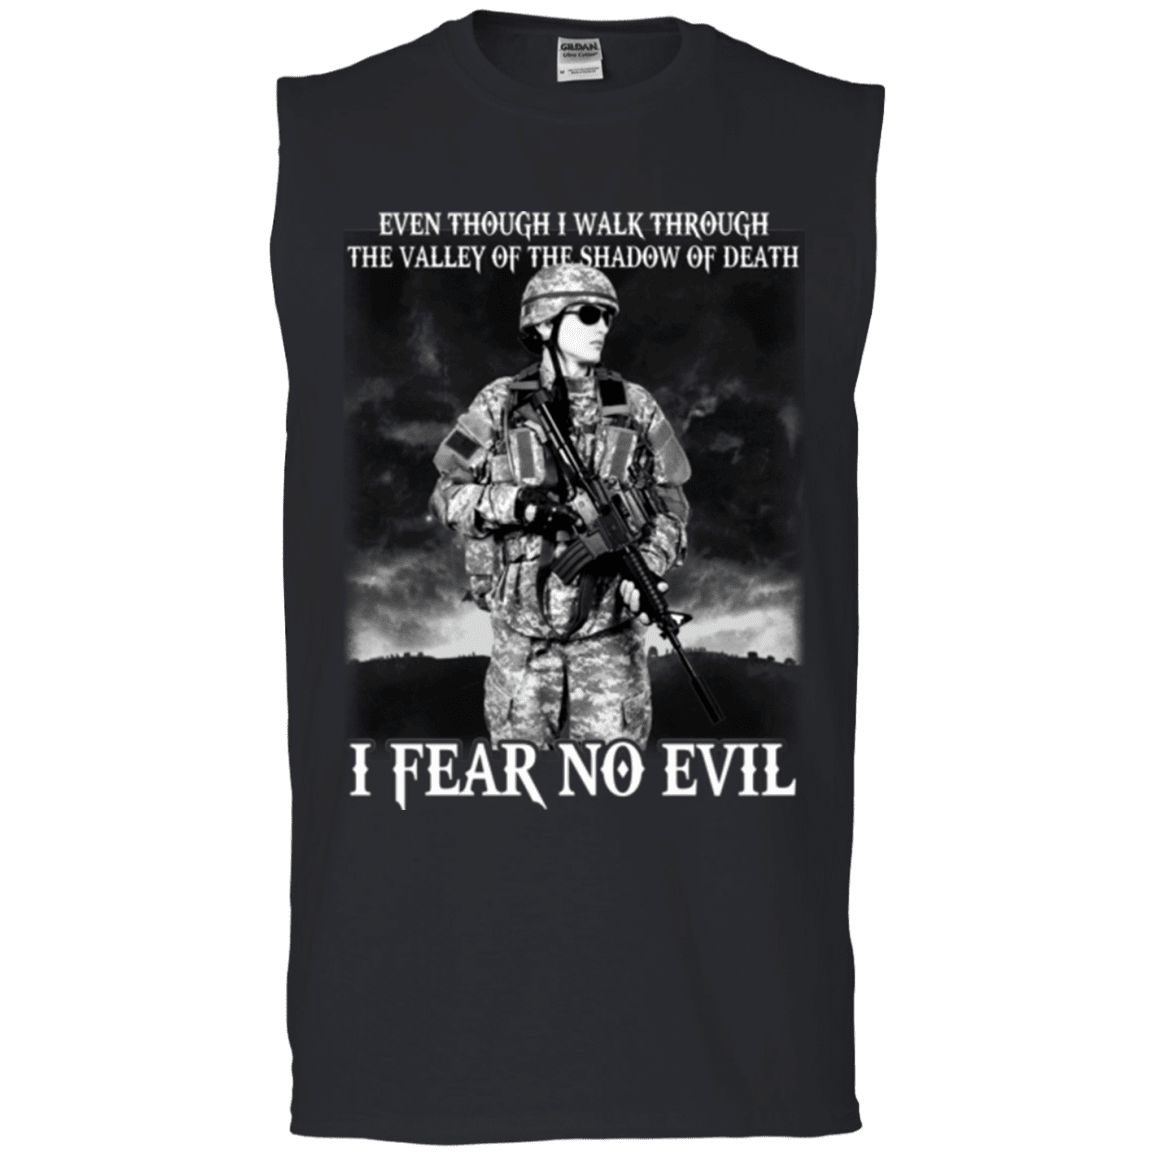 Military T-Shirt "I Fear No Evil Female Veteran Design On" Front-TShirt-General-Veterans Nation